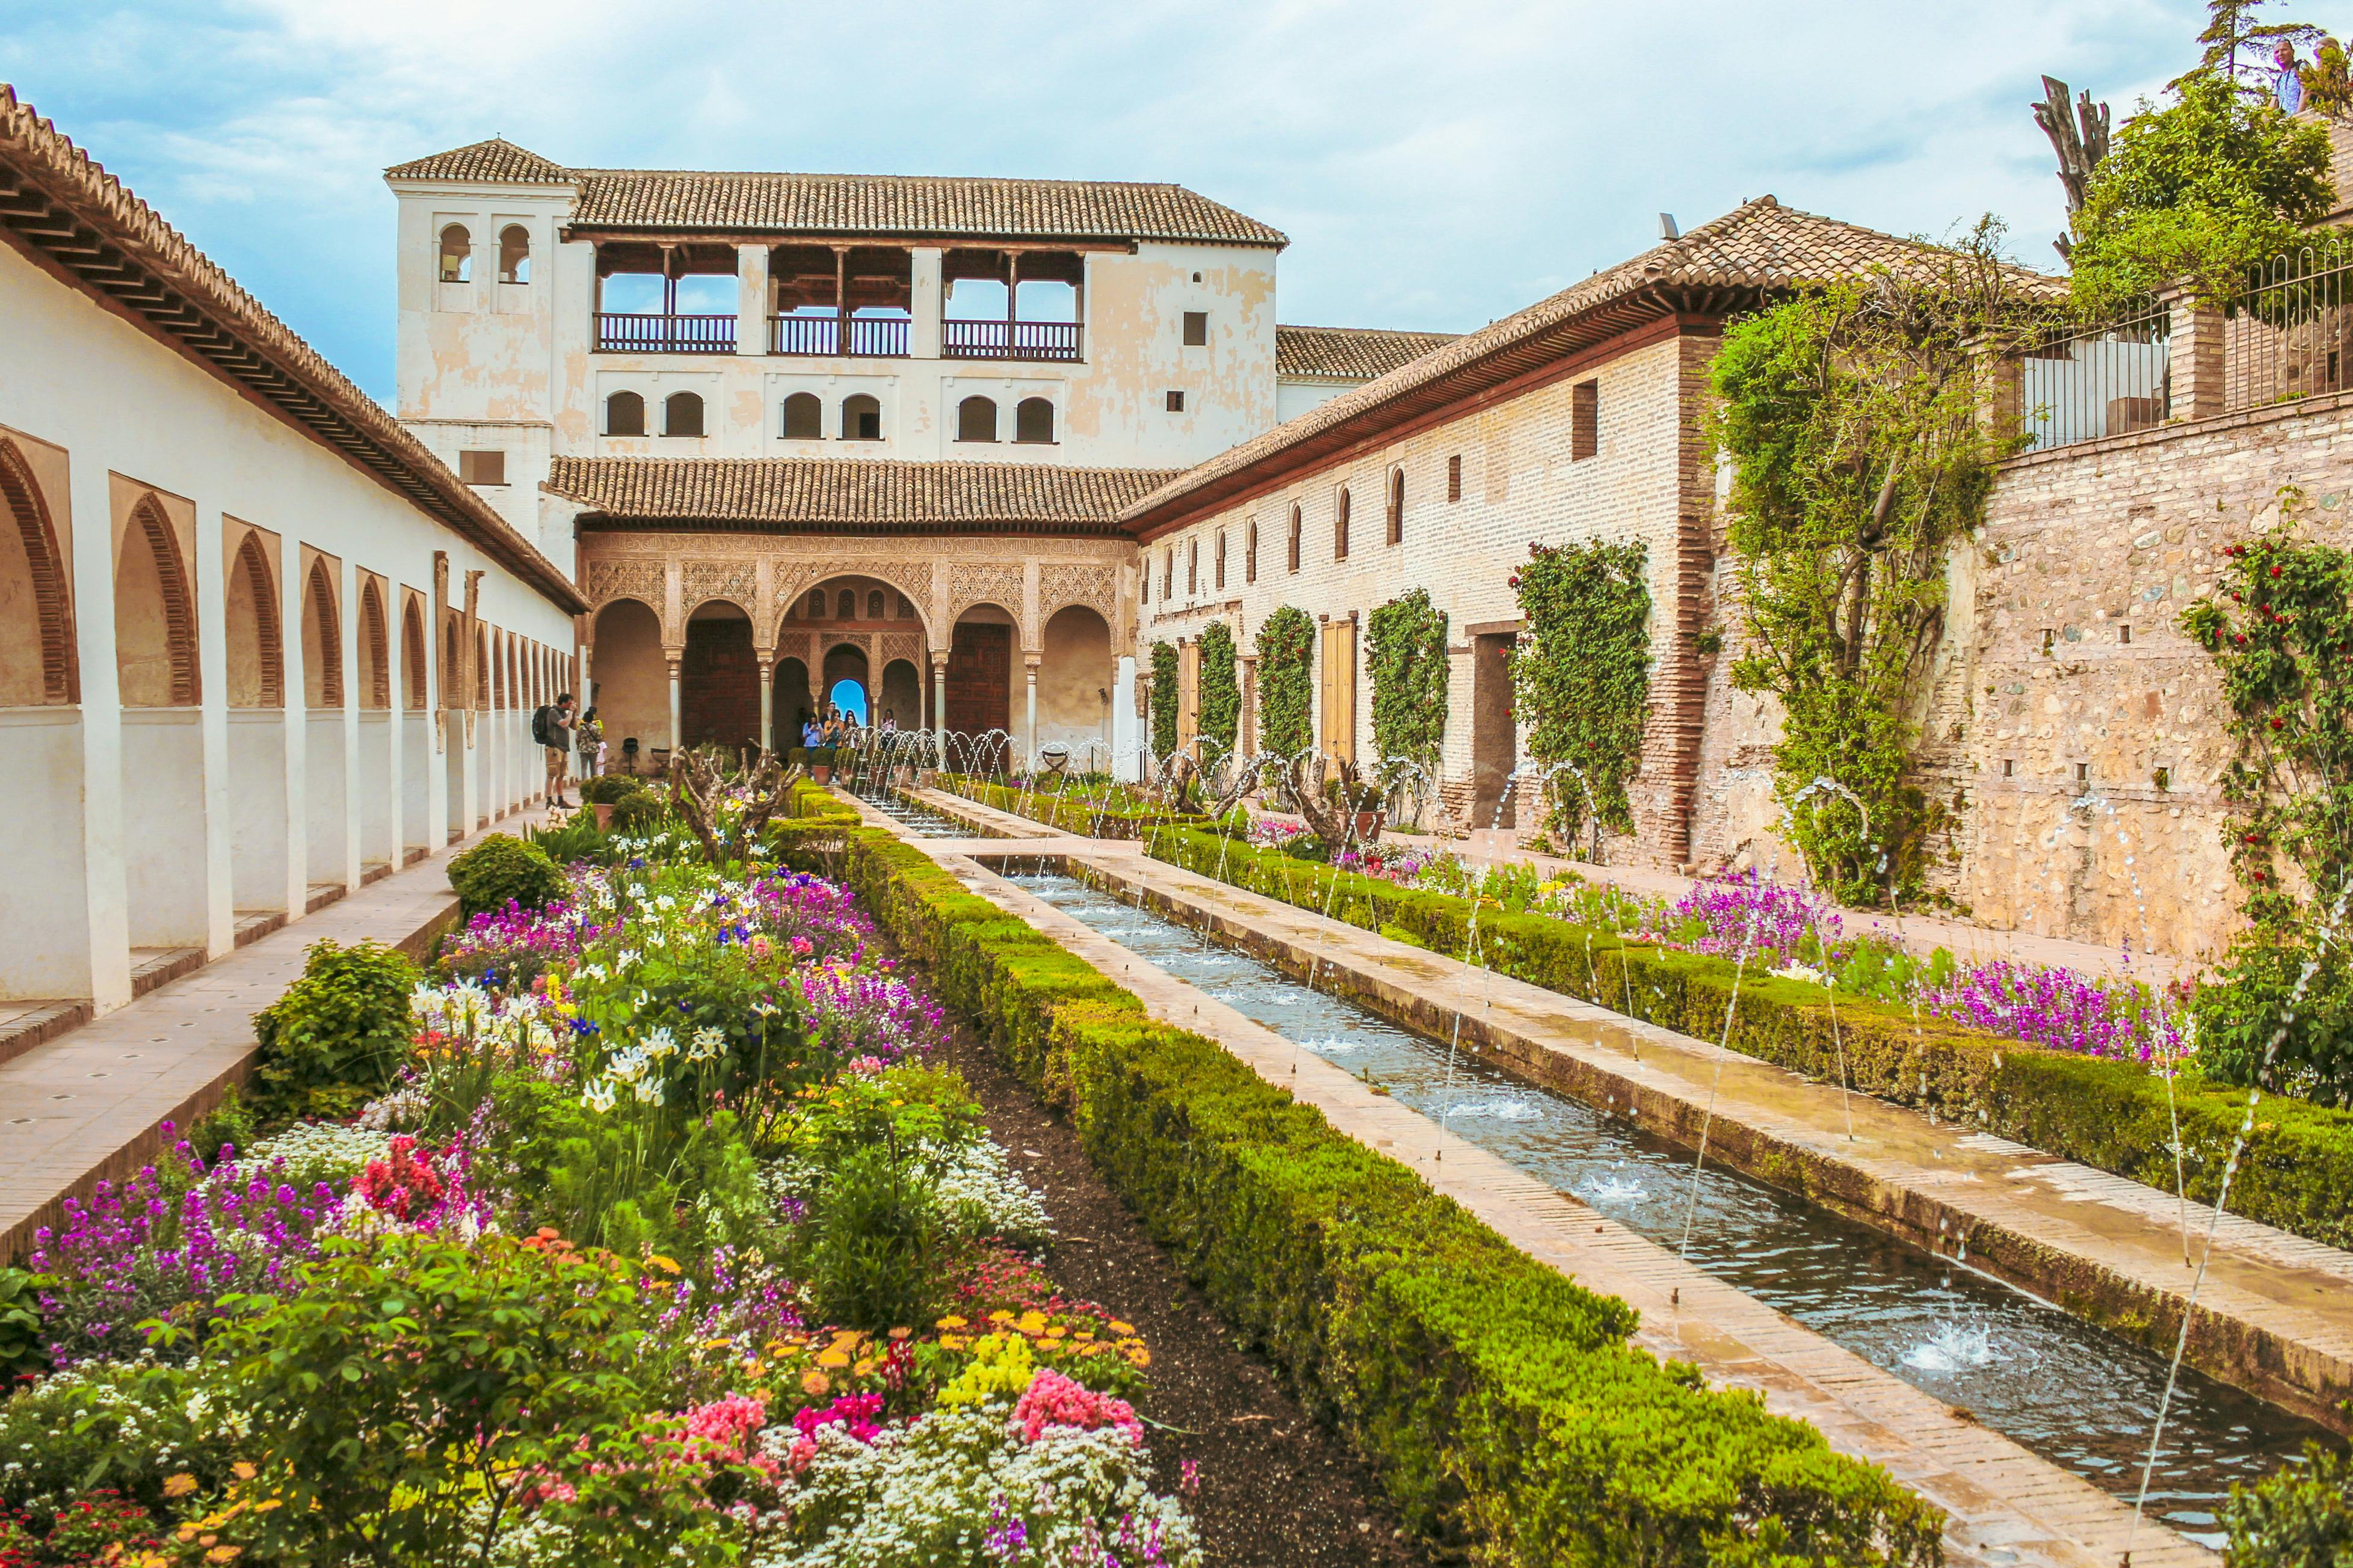 Rondleiding door het Alhambra met Carlos V-paleis, Generalife en Alcazaba